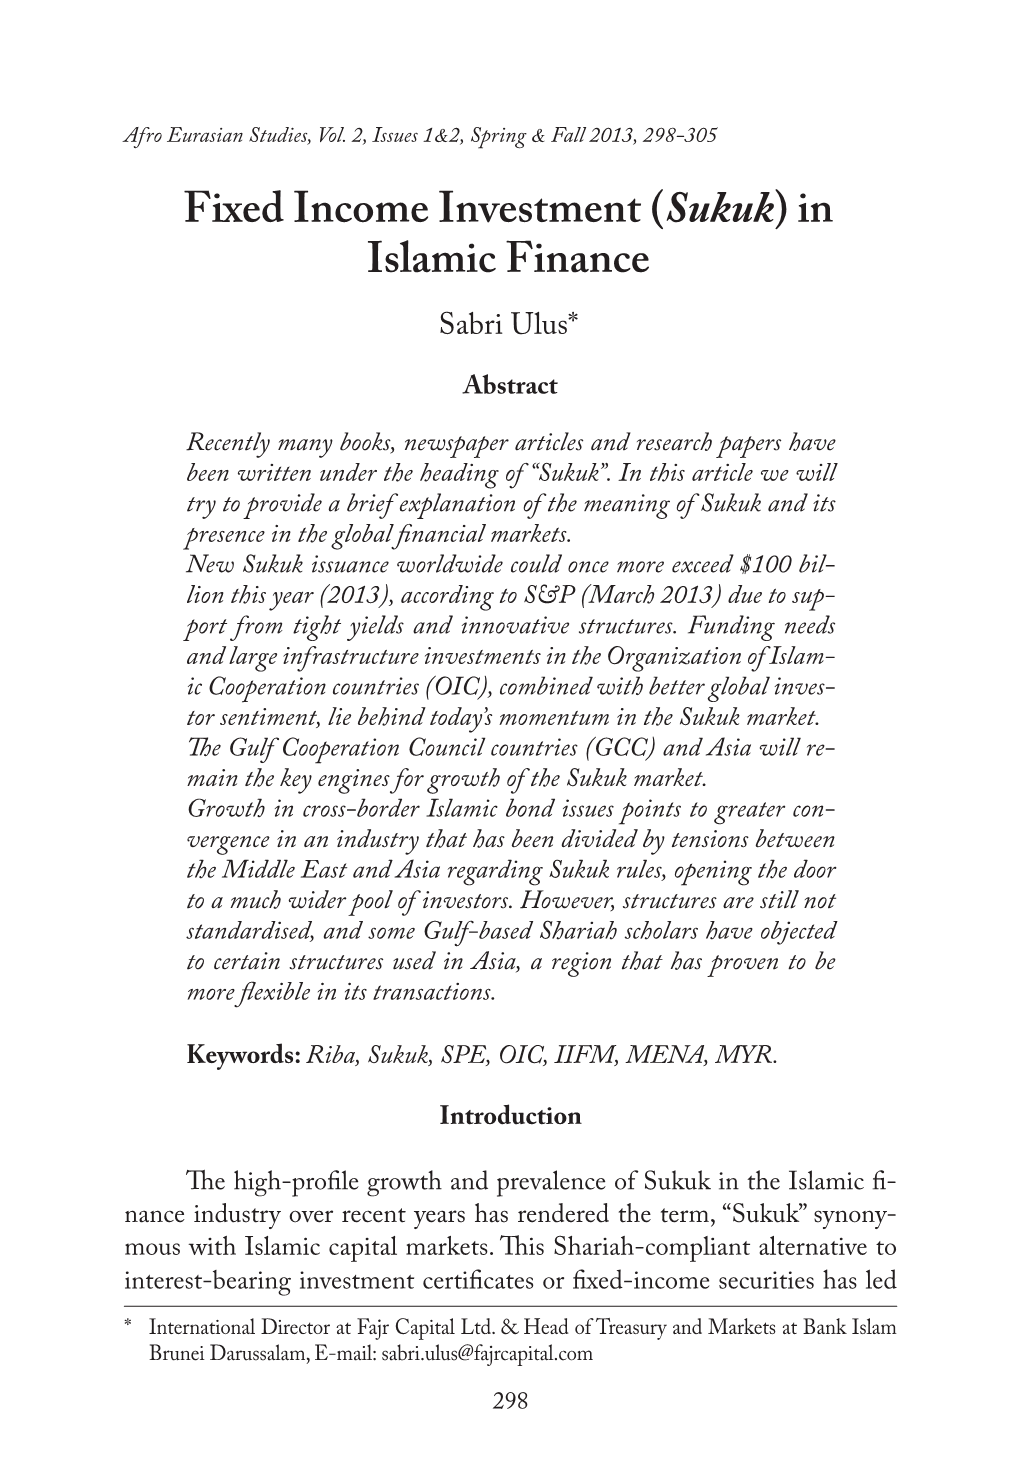 Fixed Income Investment (Sukuk) in Islamic Finance Sabri Ulus*